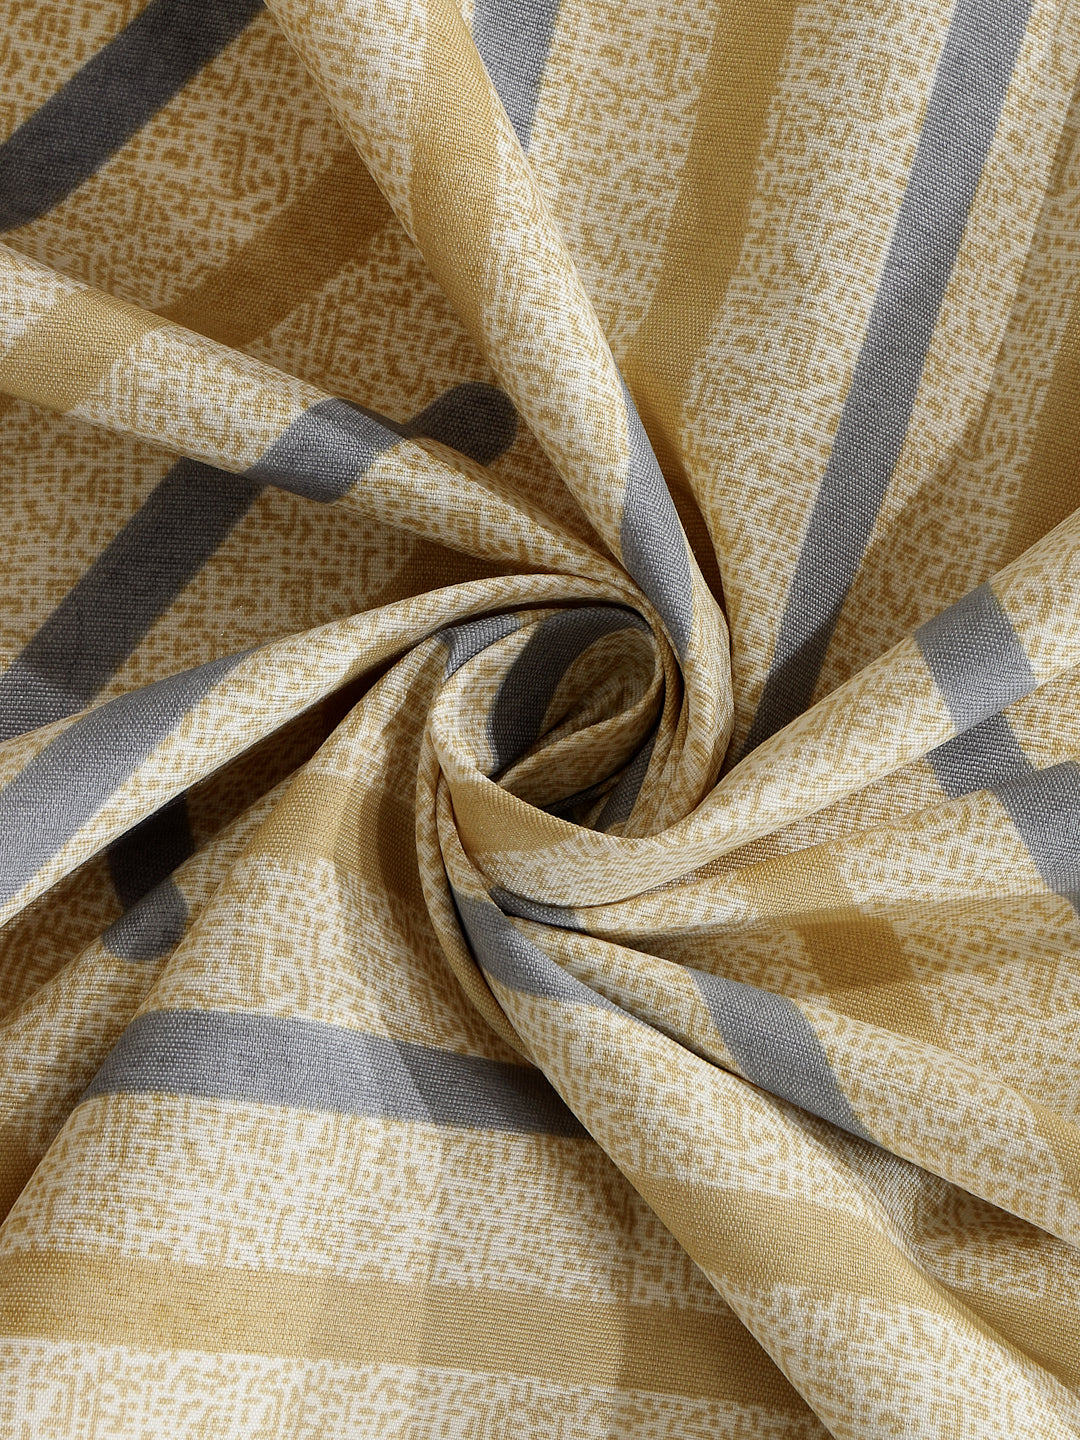 Arrabi Beige Striped Cotton Blend 8 SEATER Table Cover (215 x 150 cm)